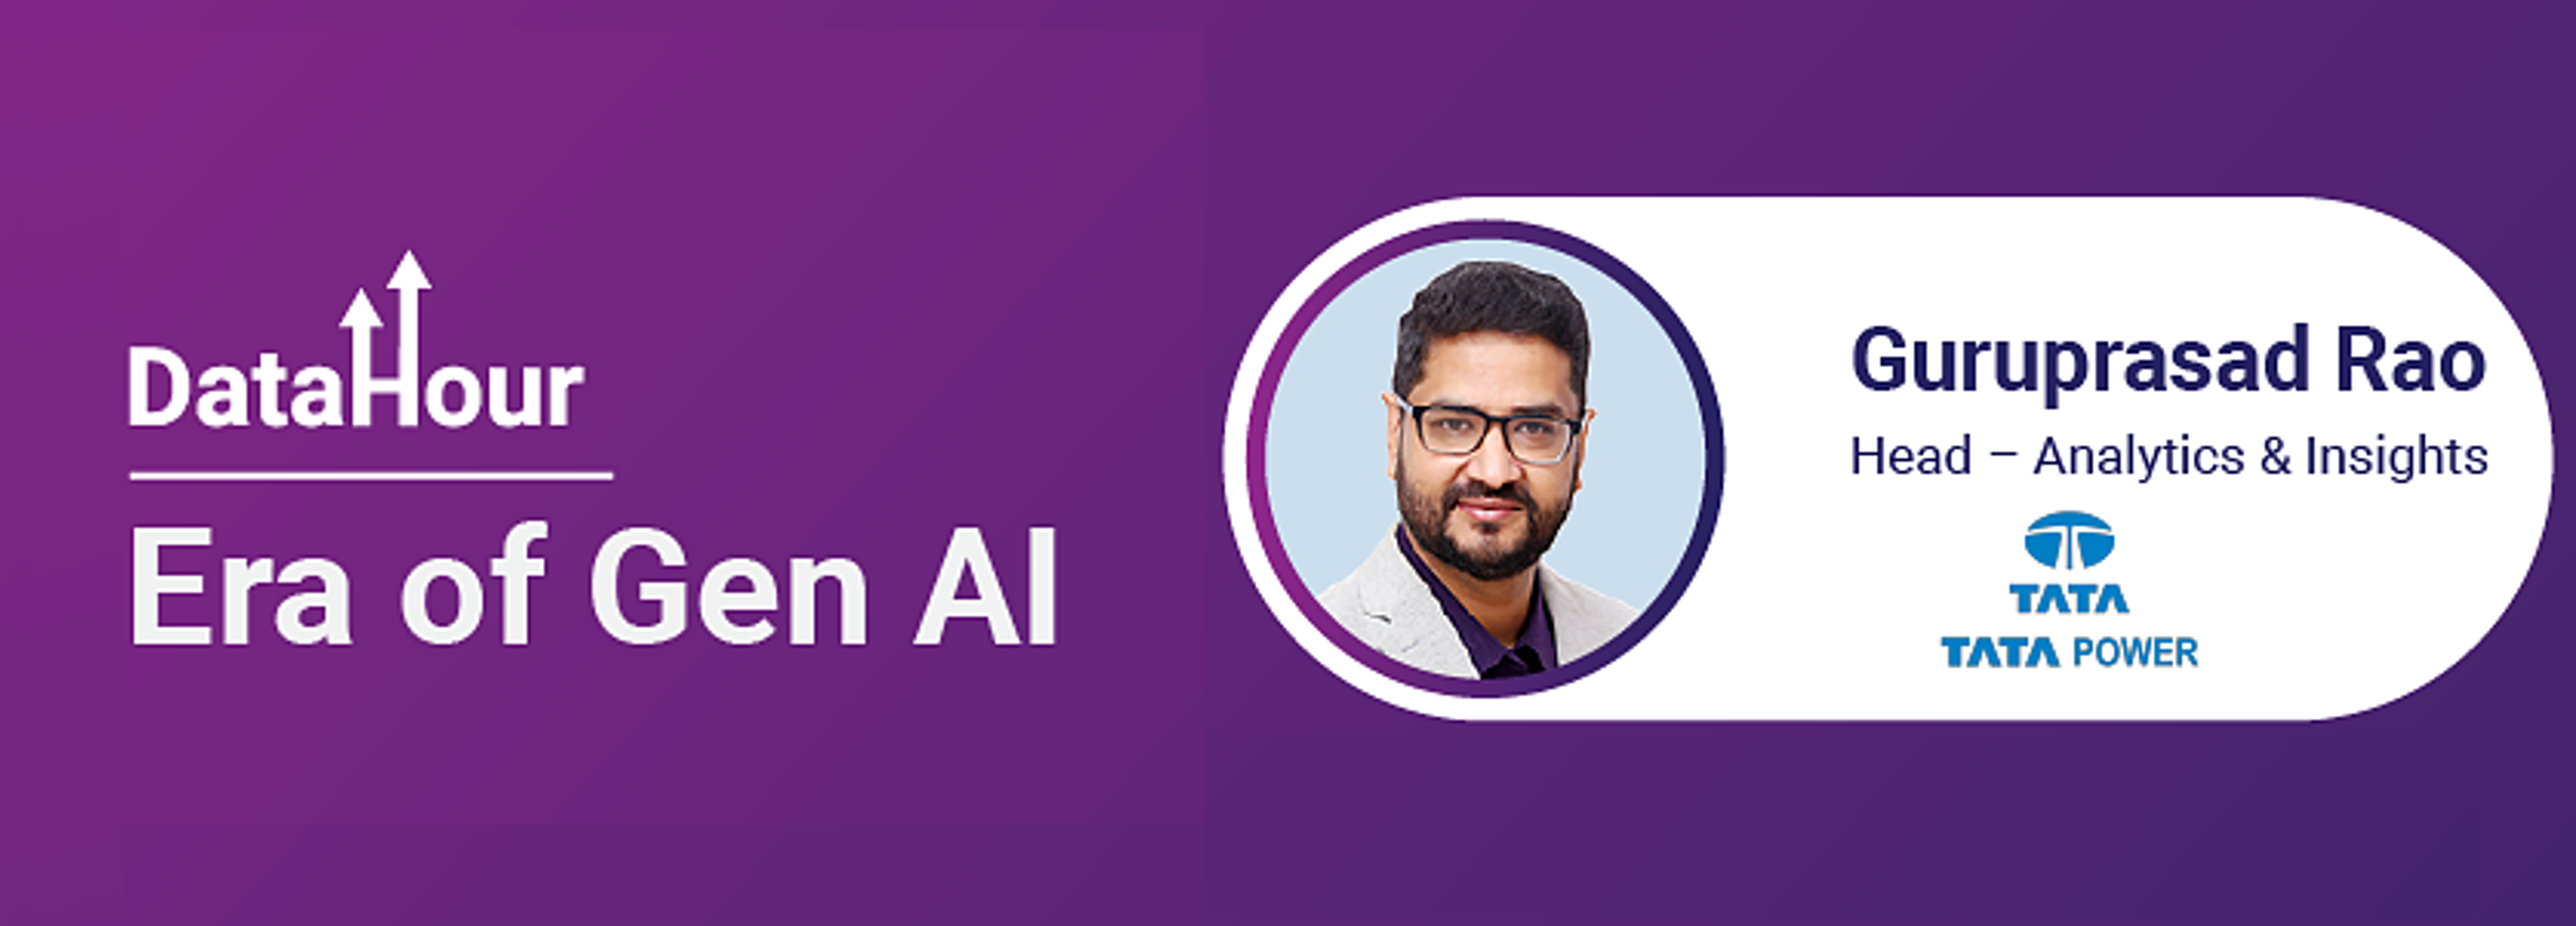 The Era of Gen AI: A New Beginning | DataHour by Guruprasad Rao